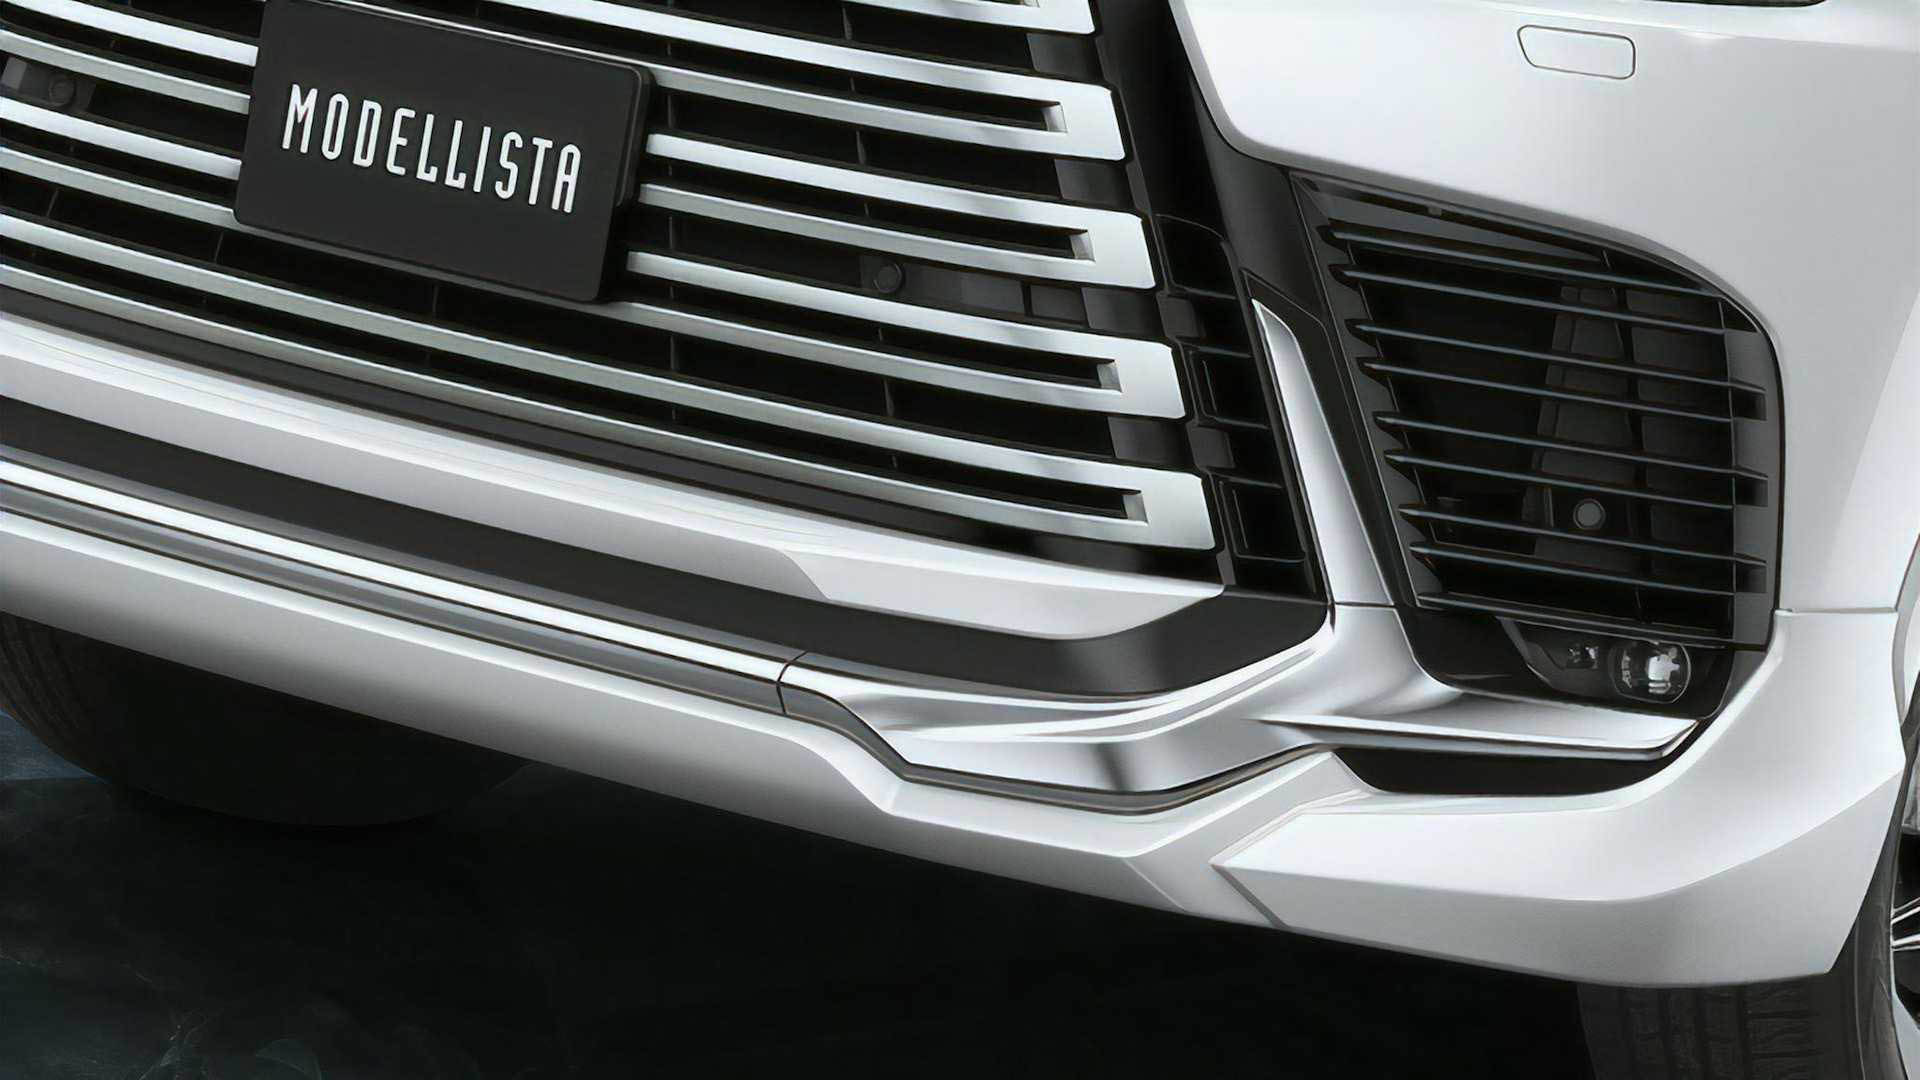 Modellista 為 Lexus LX 推出外觀升級套件